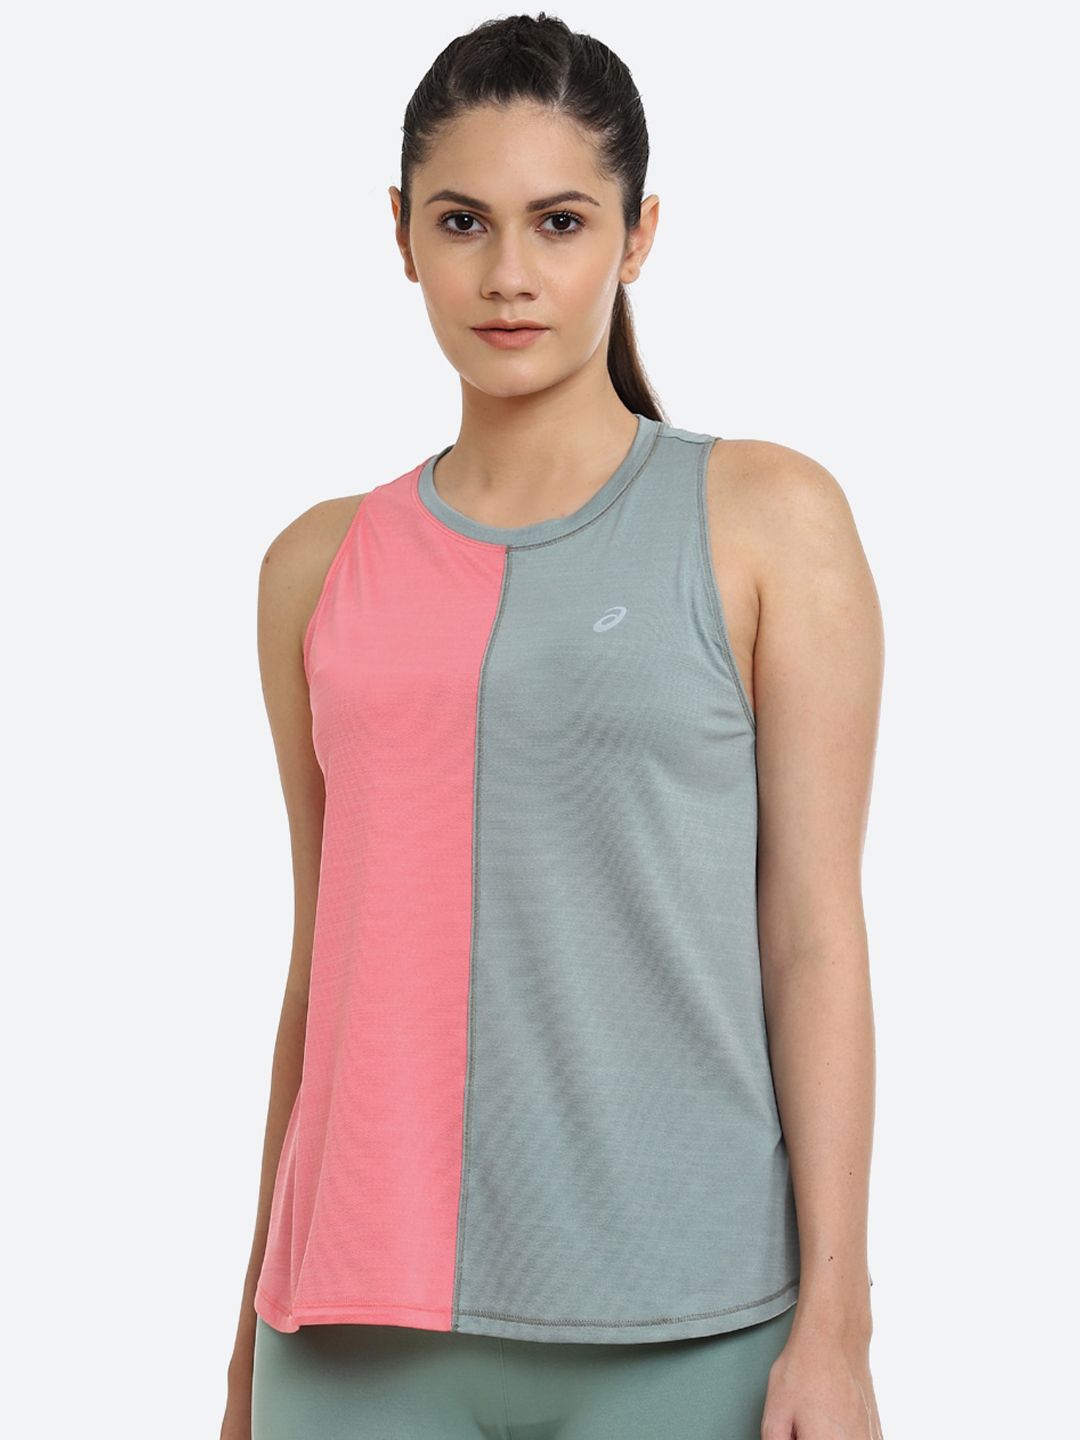 ASICS Women Grey & Pink Colourblocked Tank Running T-shirt TOKYO Price in India